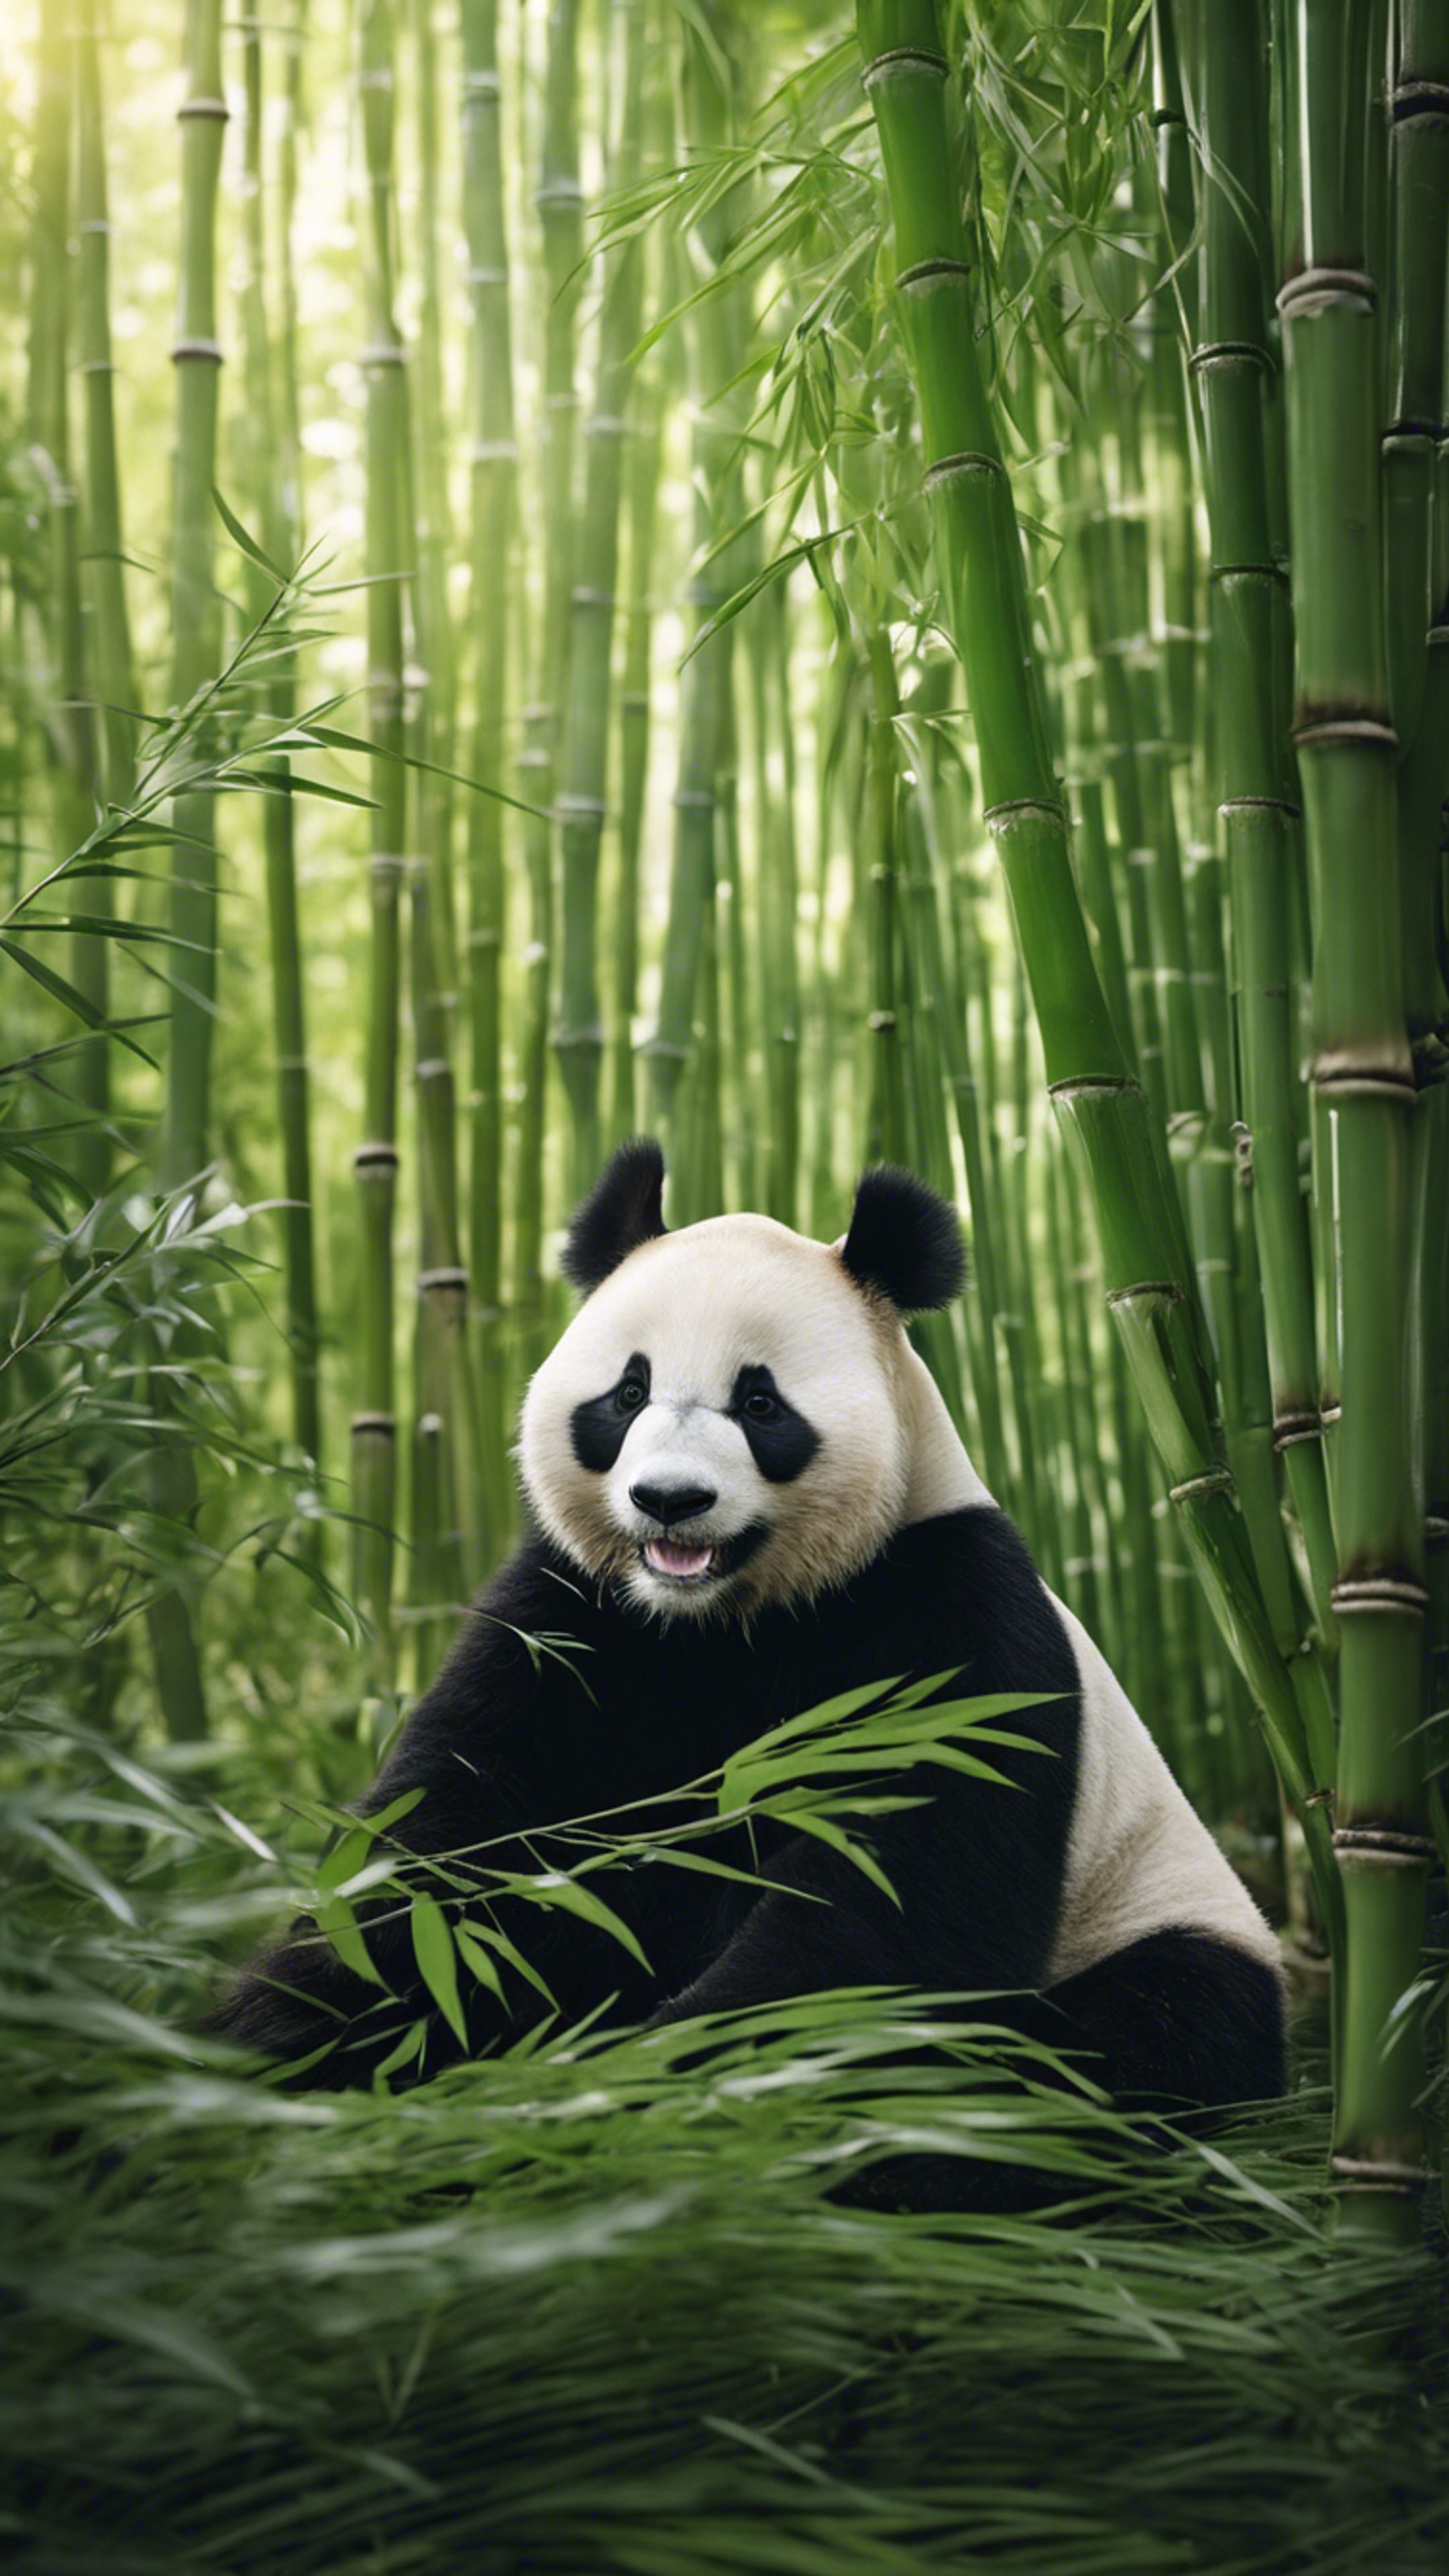 A panda bear enjoying a fresh shoot of bamboo in a mystic Chinese bamboo forest. 墙纸[b600cb92ac9945f2a443]